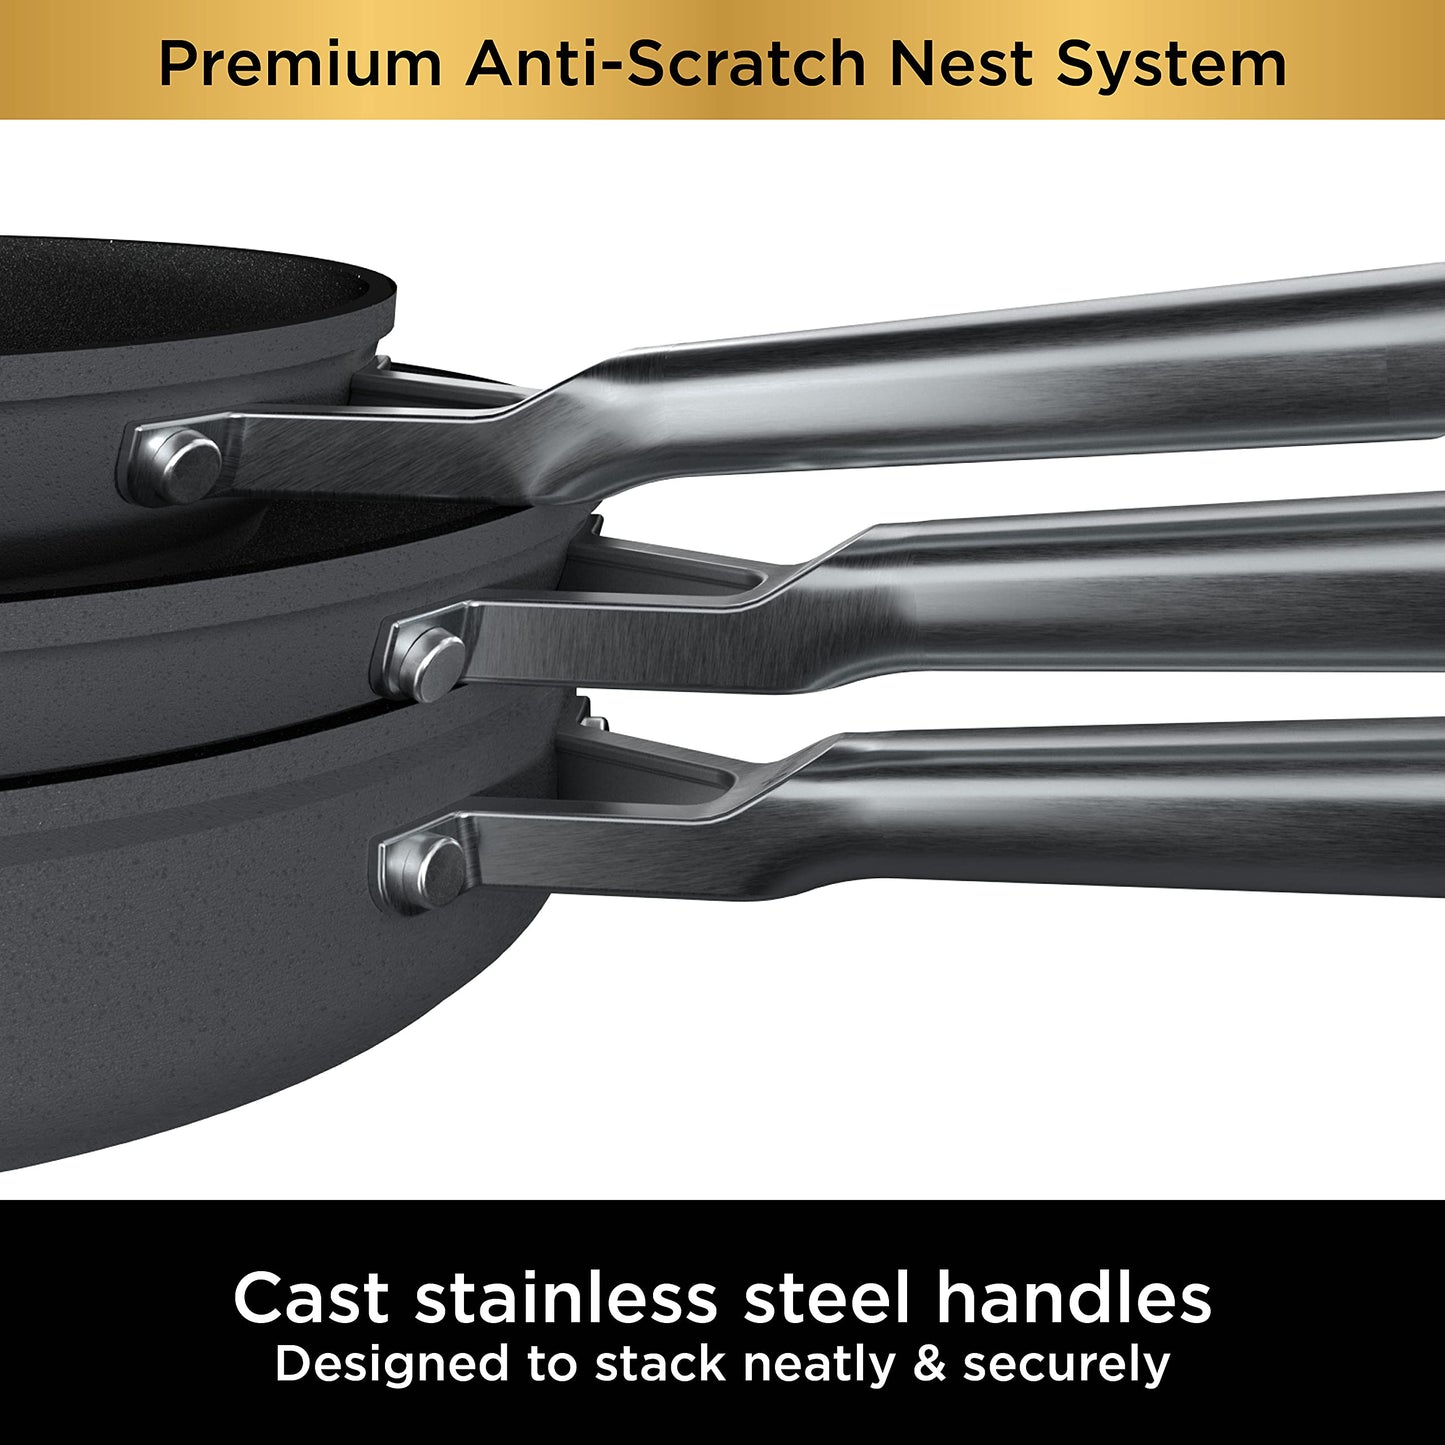 Ninja C52200 Foodi NeverStick Premium 2-Piece Fry Pan Set, Anti-Scratch Nesting Cookware, Hard-Anodized, Nonstick, Durable & Oven Safe to 500°F, Black